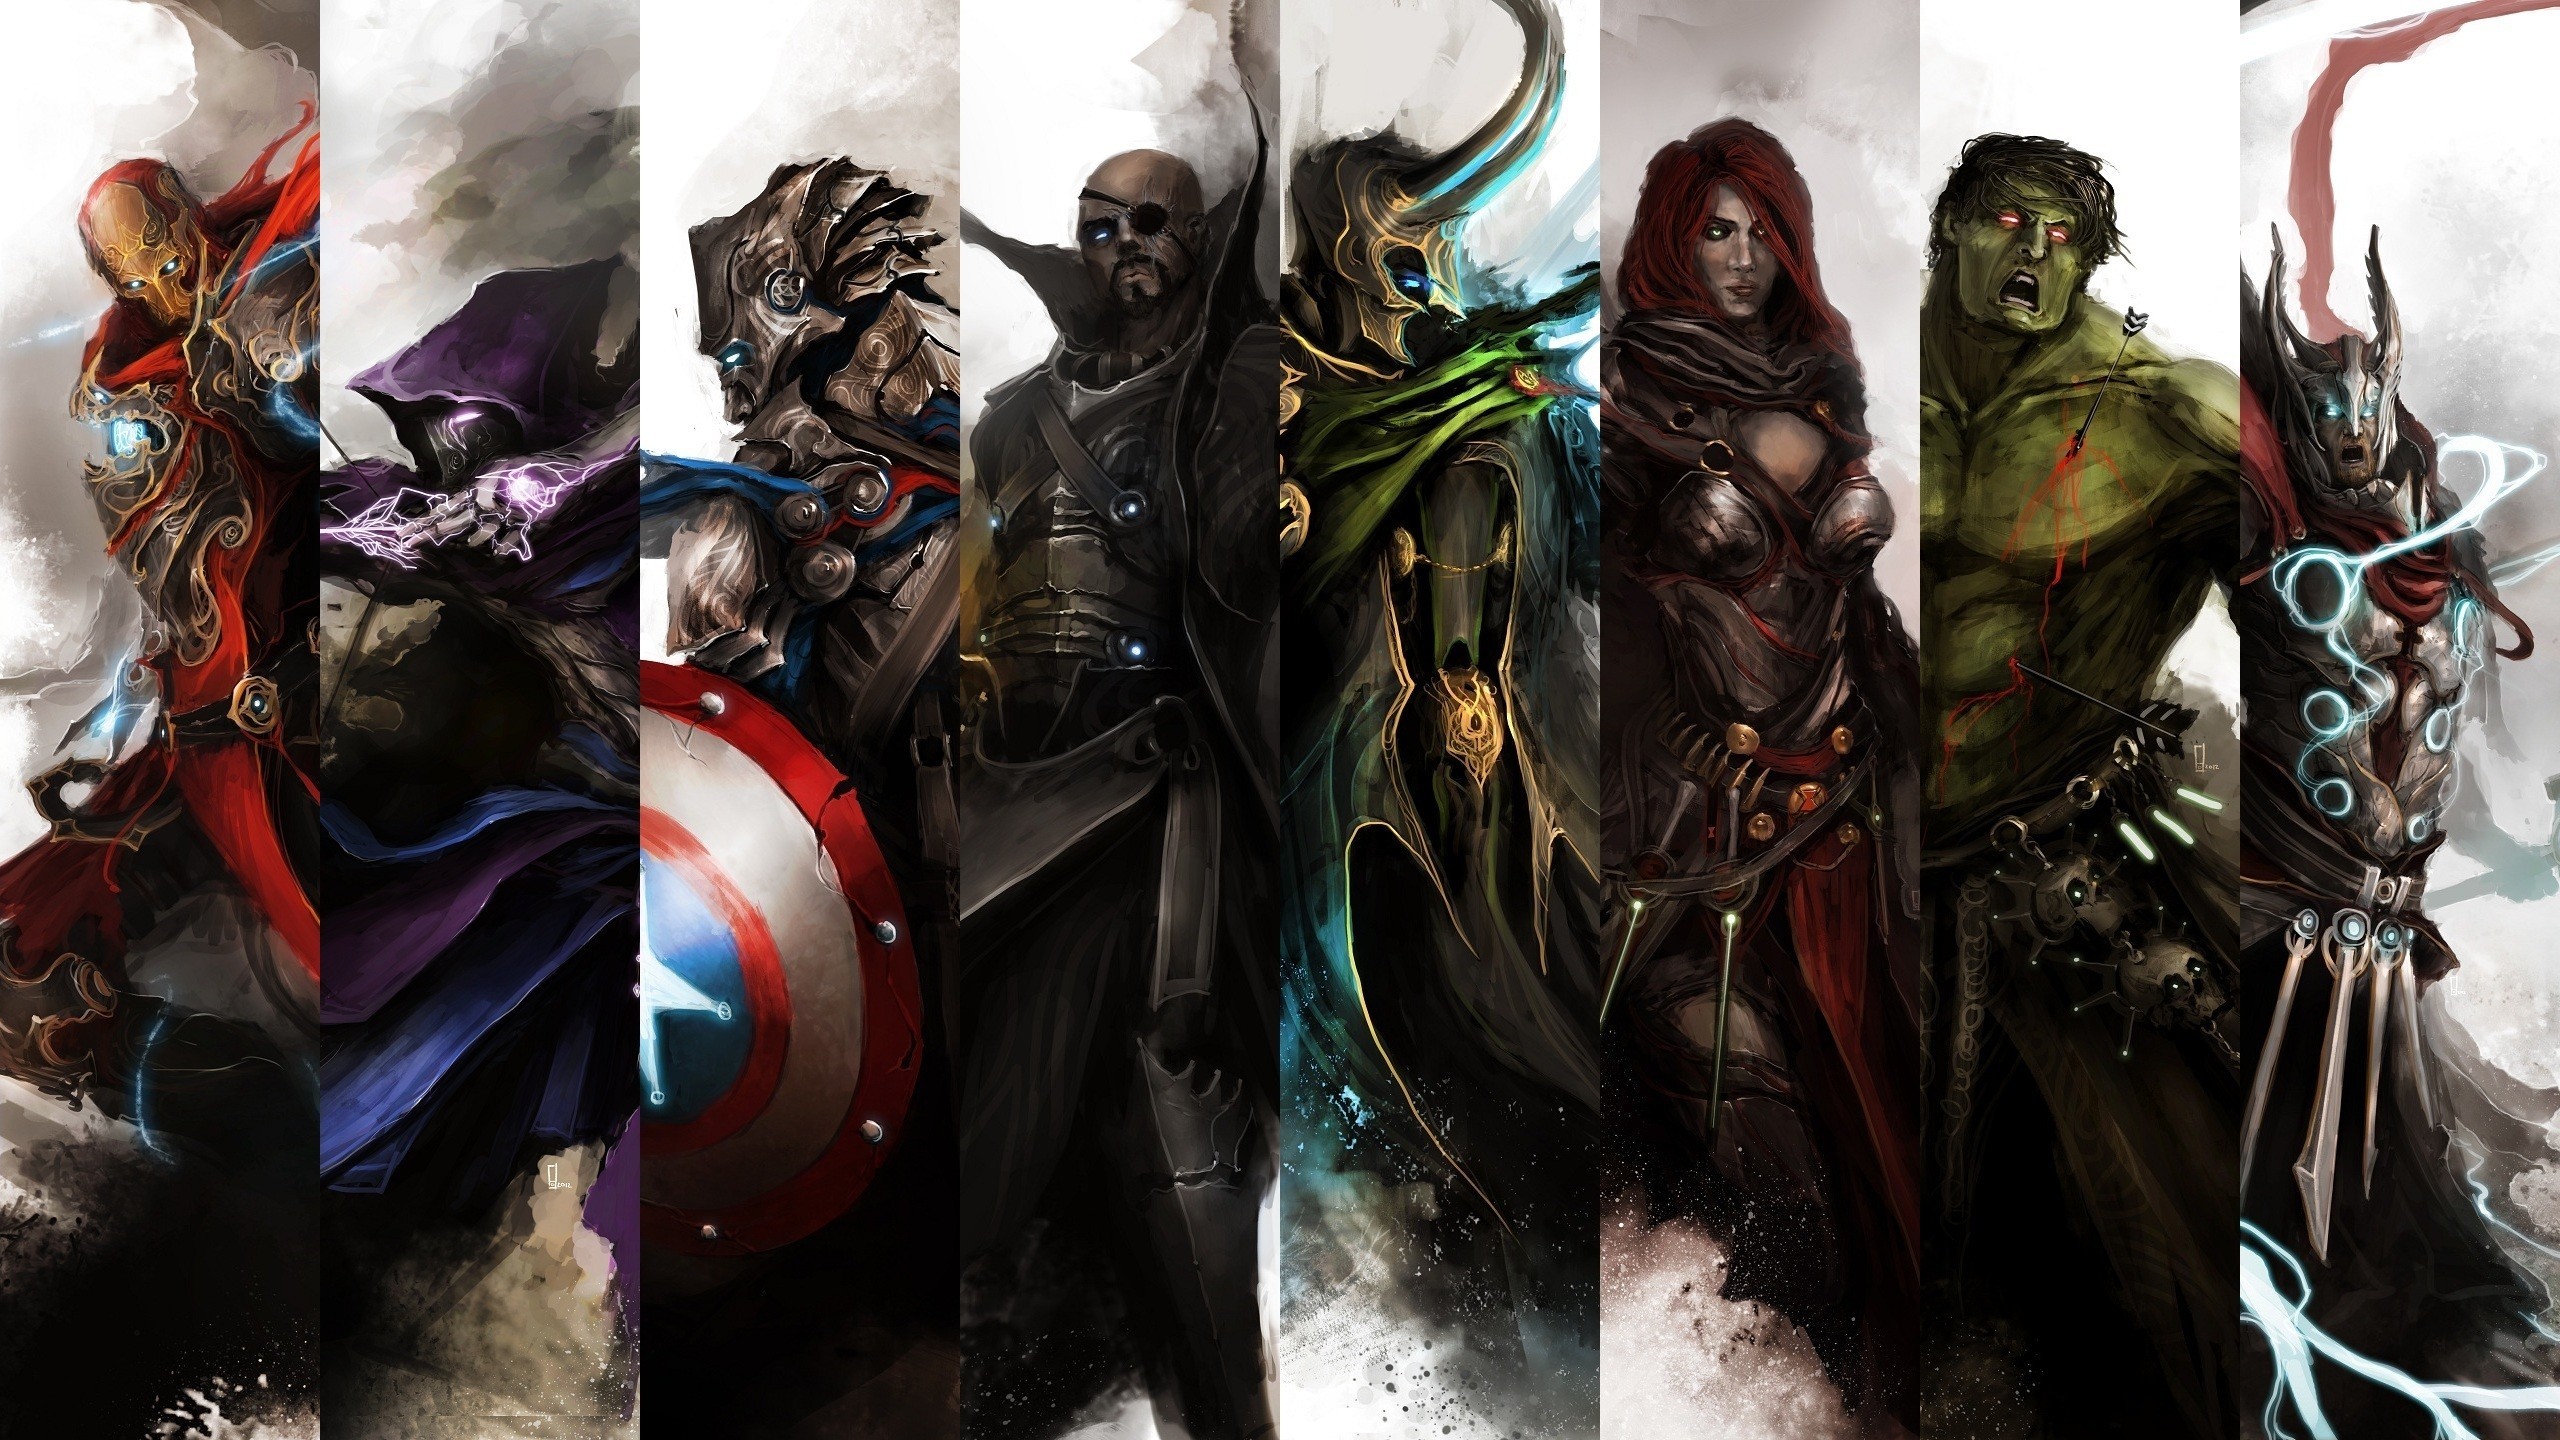 General 2560x1440 The Avengers Iron Man Thor Hulk Black Widow Captain America Hawkeye Nick Fury Loki line-up video games collage superhero superheroines Marvel Comics